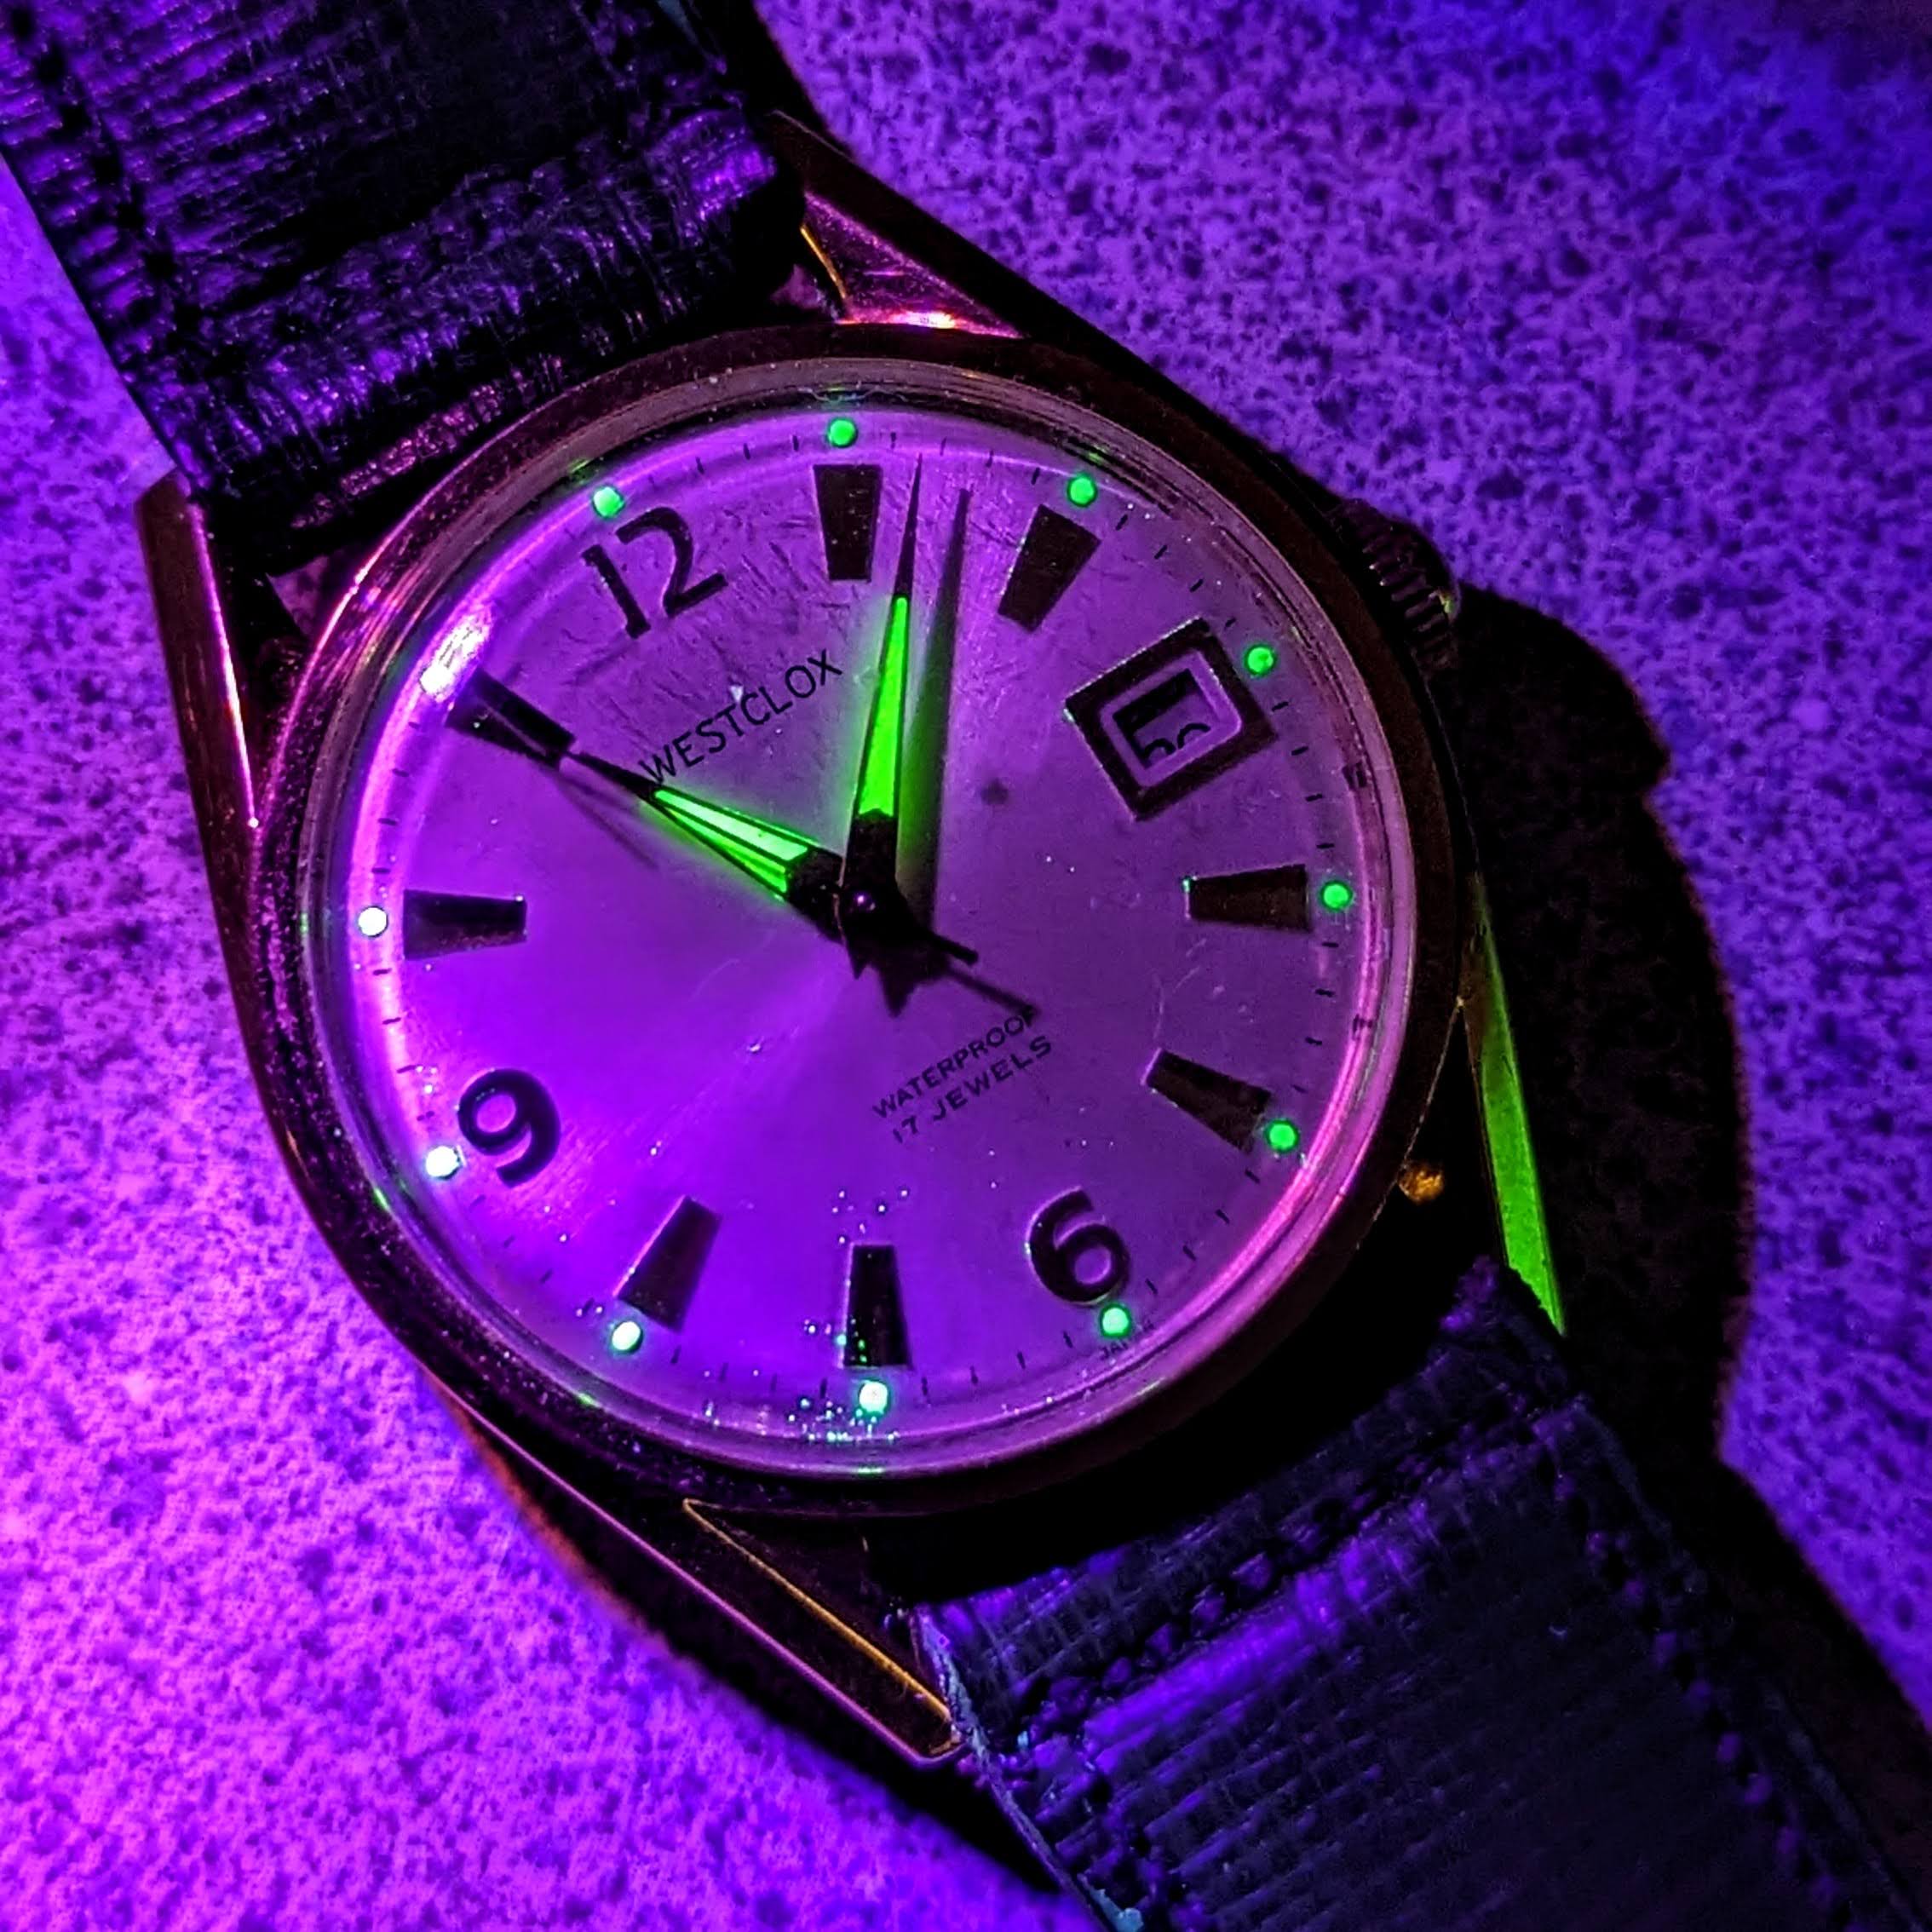 Vintage WESTCLOX Waterproof Wristwatch 17 Jewels Cal. D-441 Date Indicator Watch